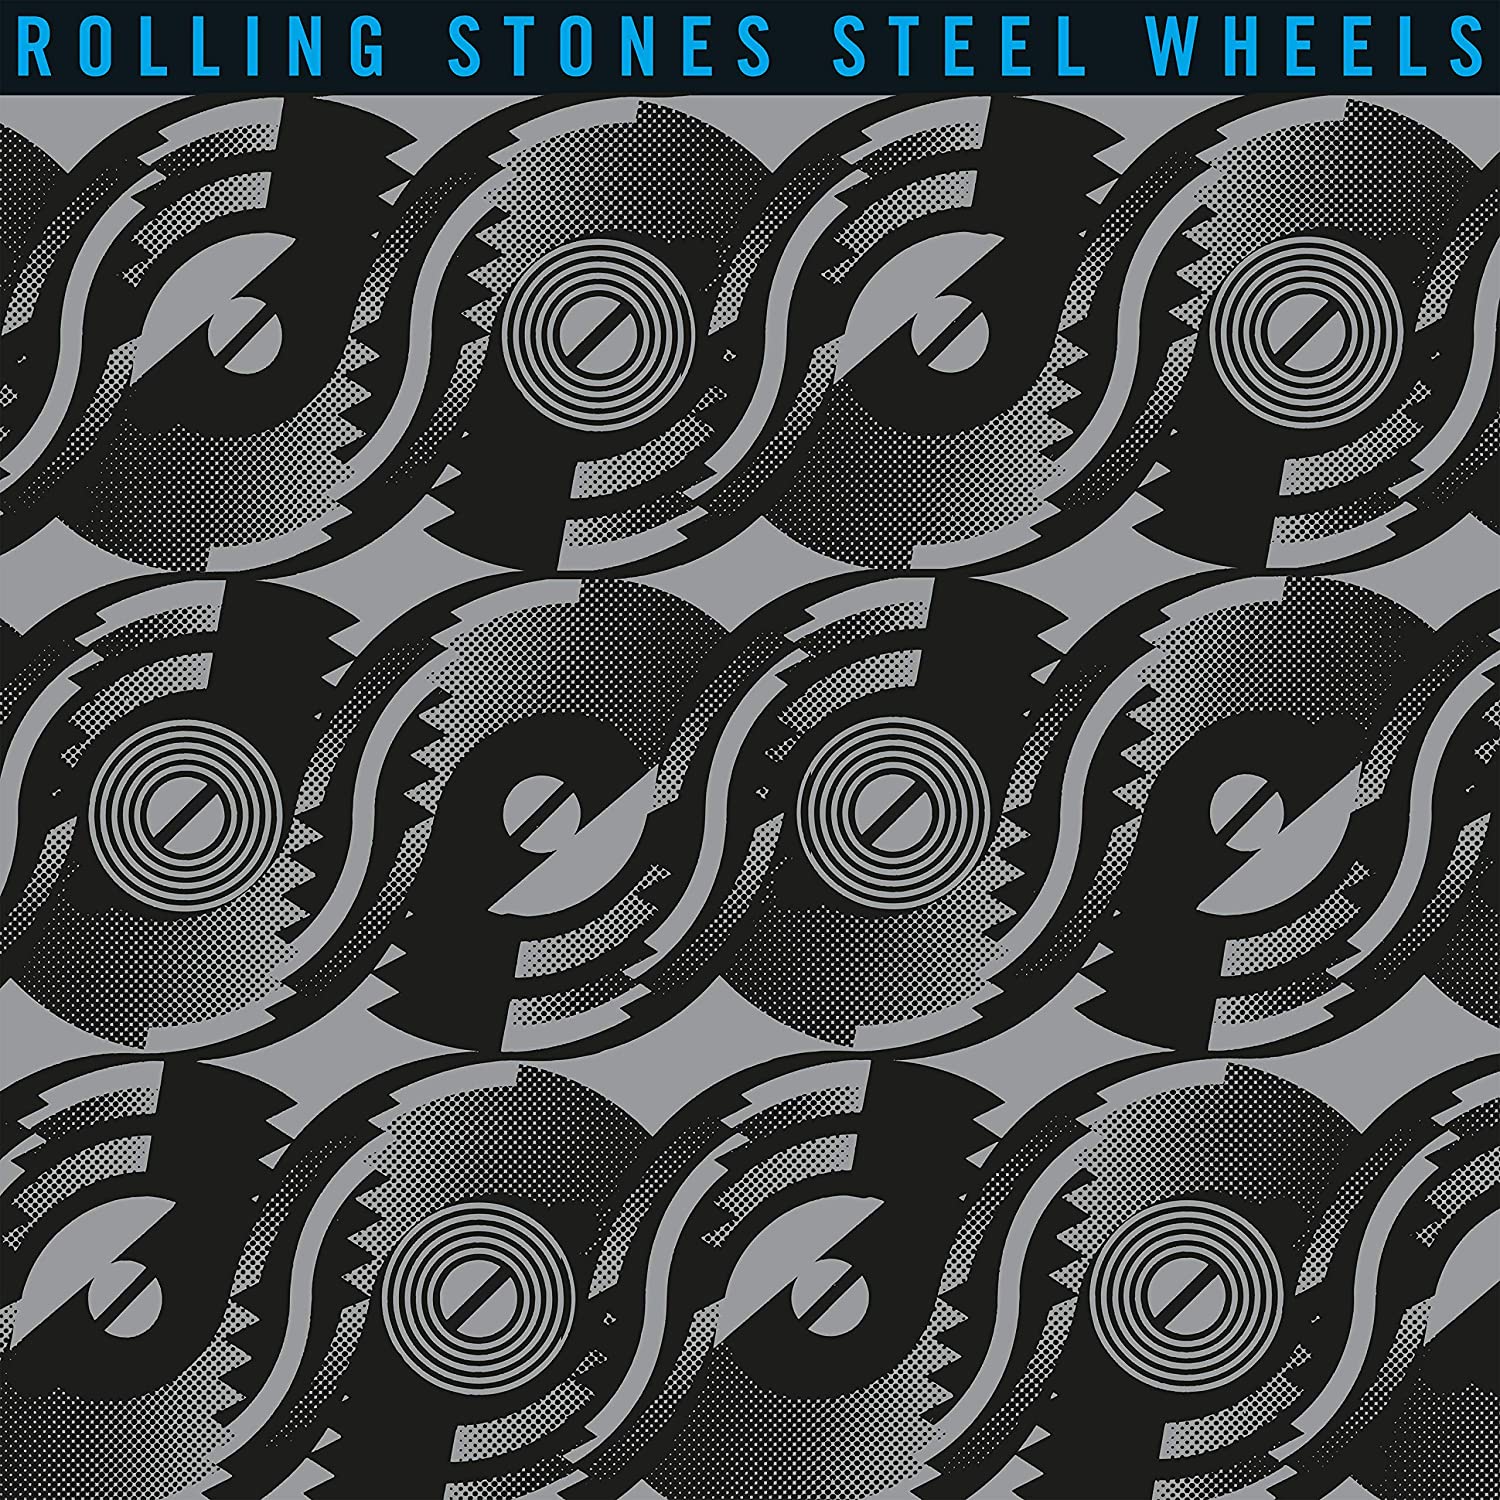 Steel Wheels - Vinyl | The Rolling Stones image